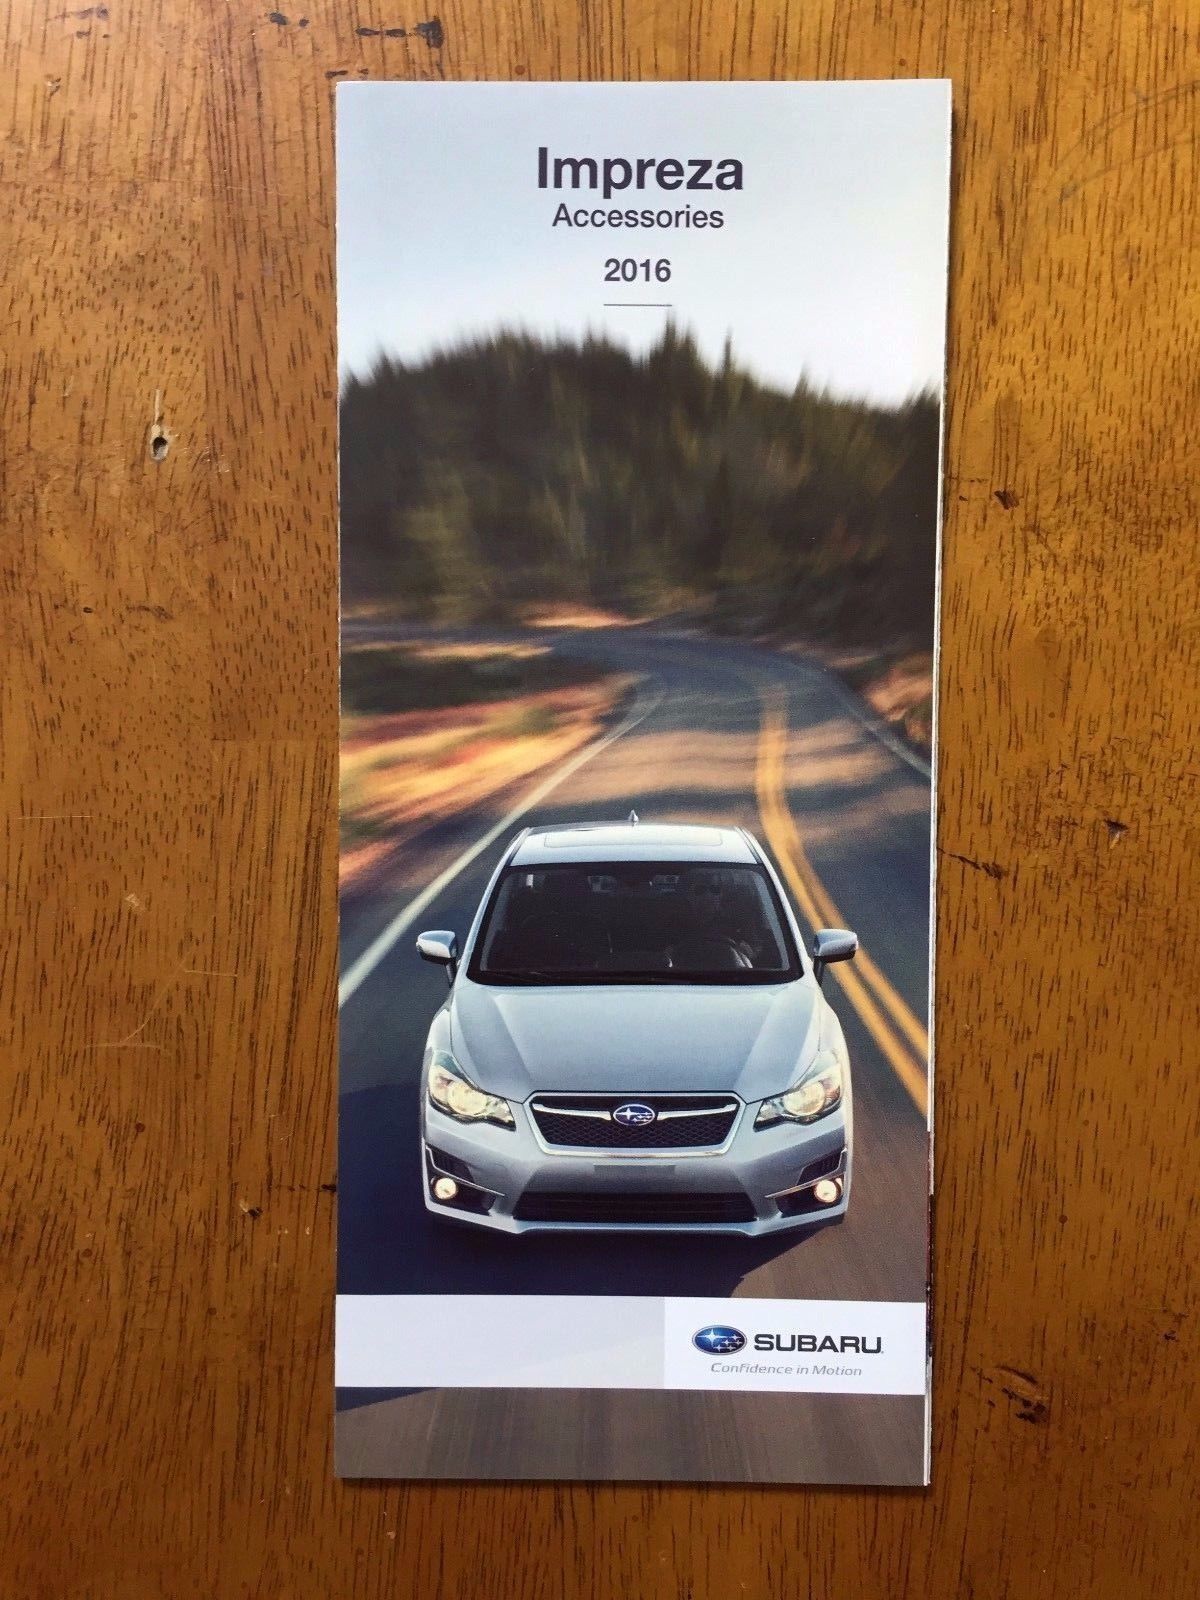 2016 Subaru Impreza Accessories catalog sales brochure booklet - $4.99